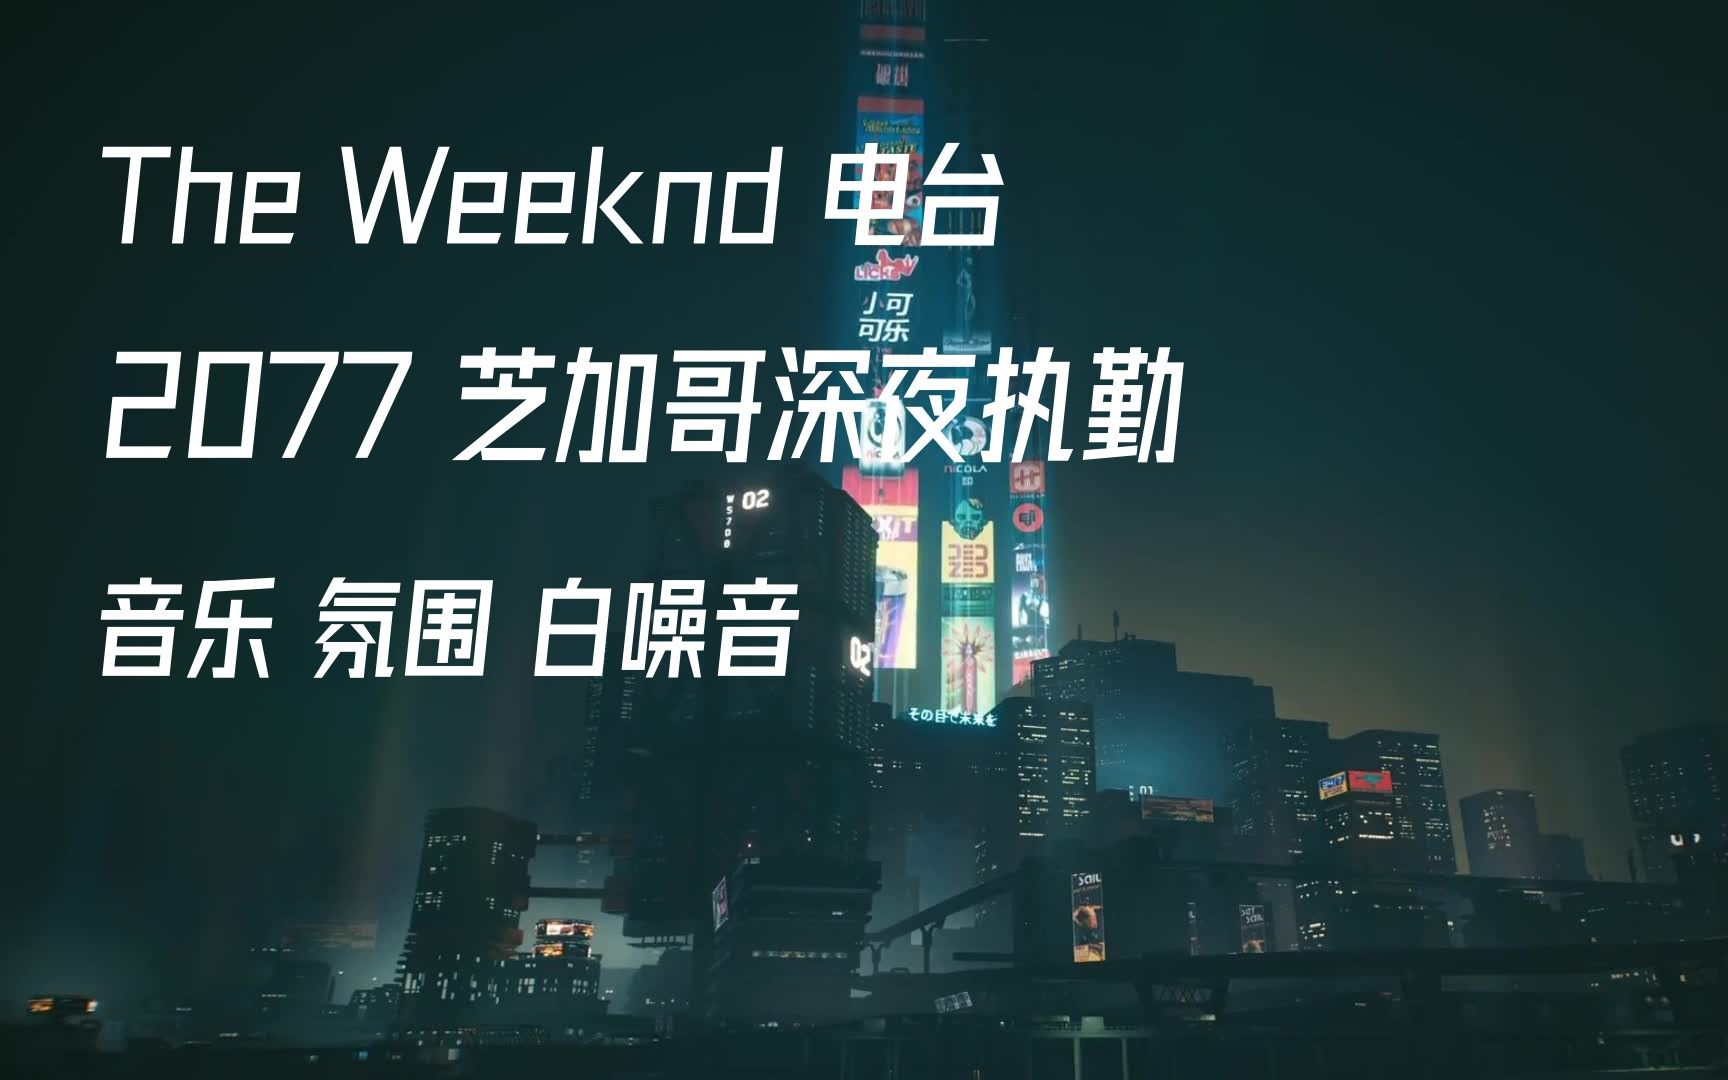 The Weeknd 电台 - 2077 在芝加哥的执勤的夜晚 你打开了FM | 专属电台 氛围 白噪音